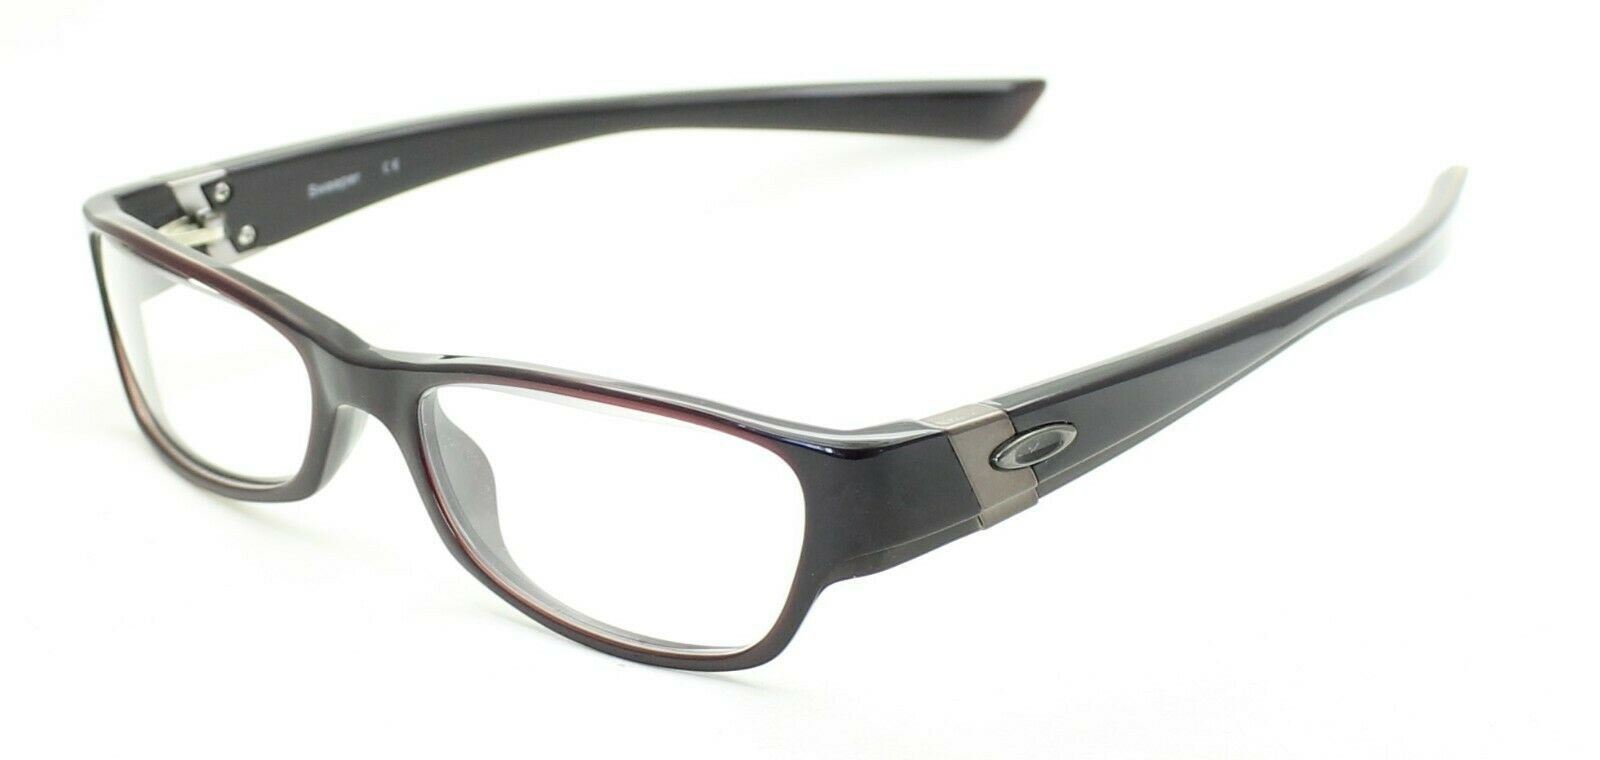 OAKLEY SWEEPER 11-924 52mm Eyewear FRAMES RX Optical Eyeglasses Glasses - New